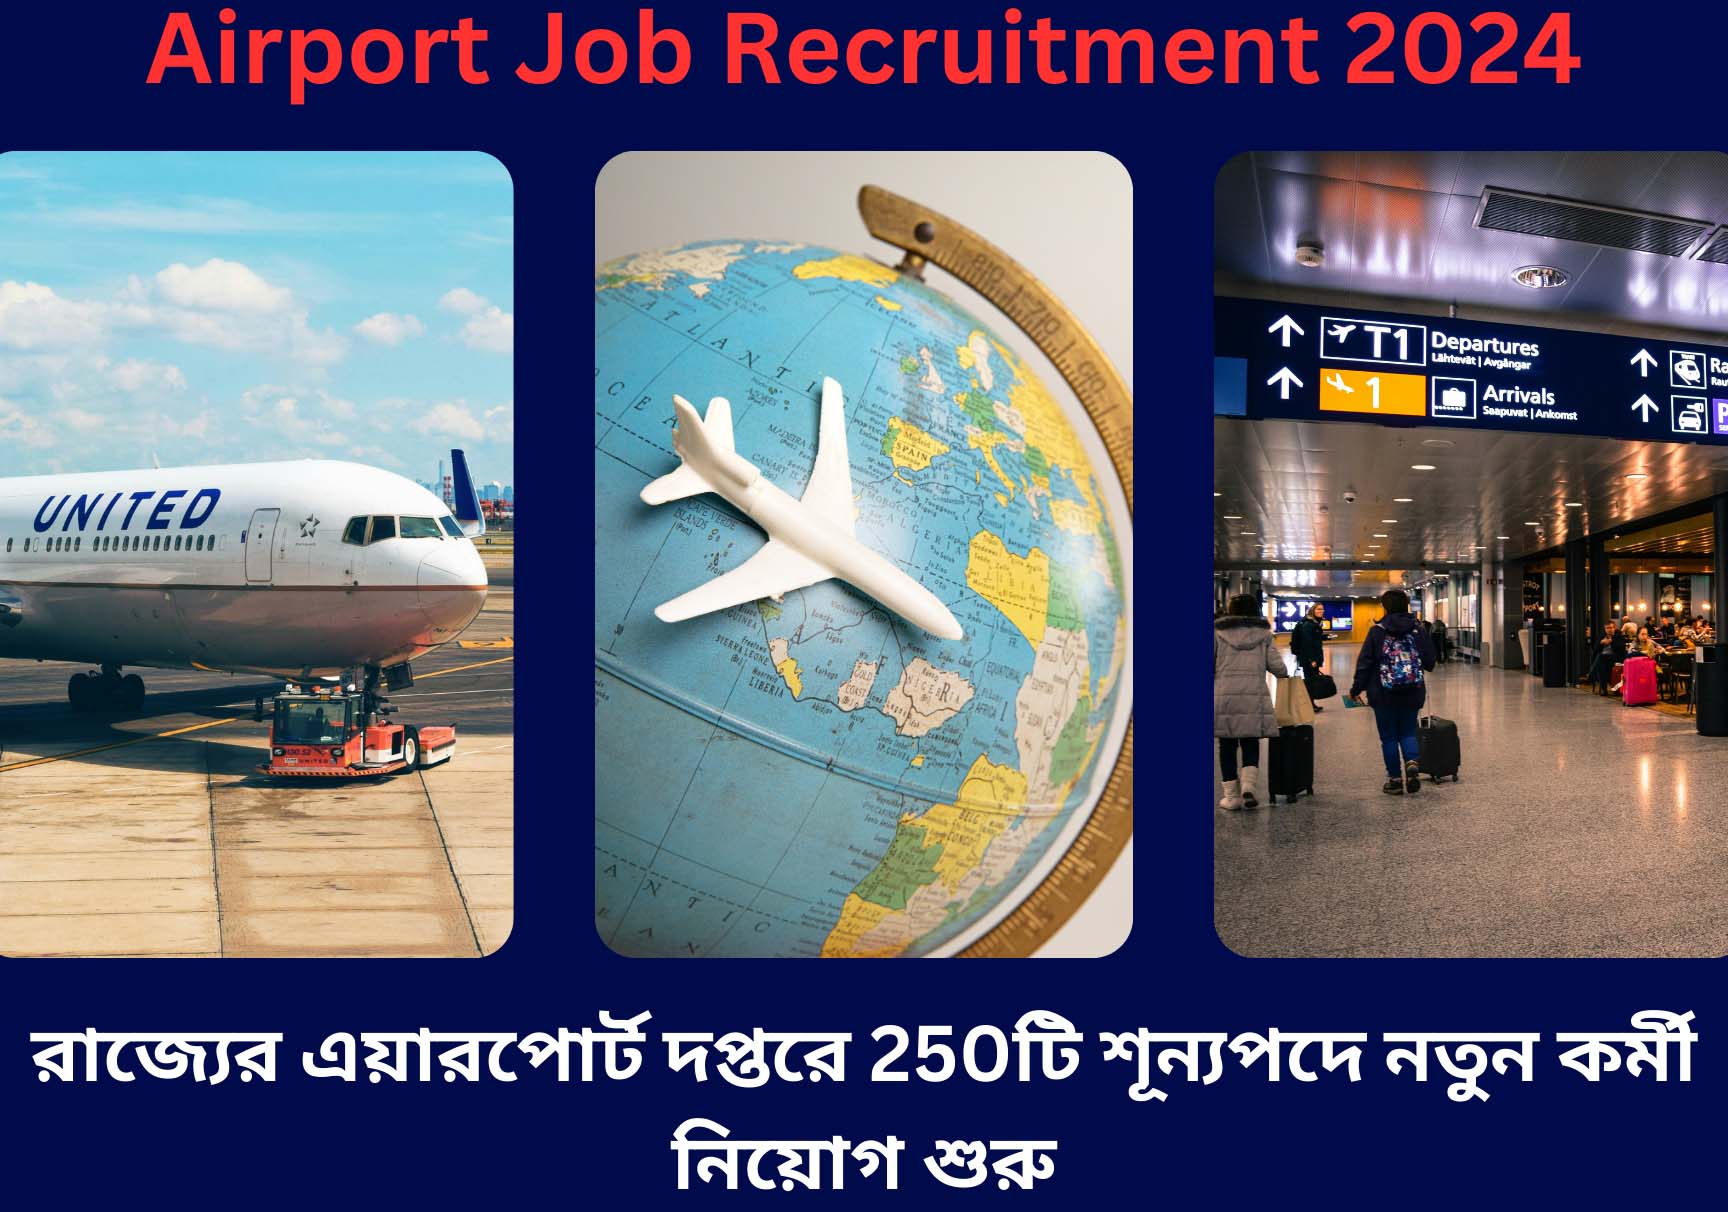 Airport Job Recruitment 2024 : রাজ্যের এয়ারপোর্ট দপ্তরে 250টি শূন্যপদে নতুন কর্মী নিয়োগ শুরু